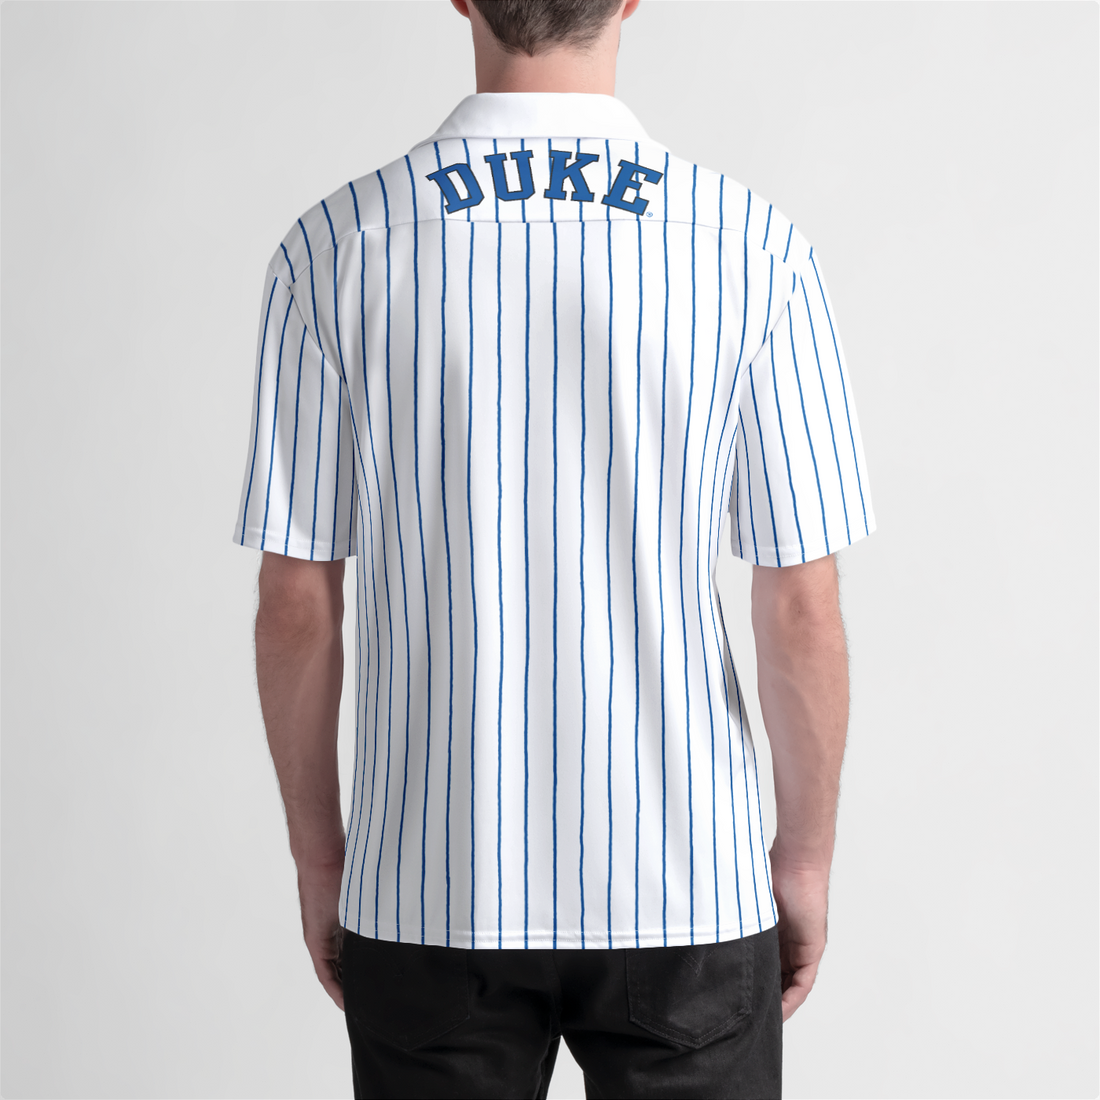 Duke Beach Shirt